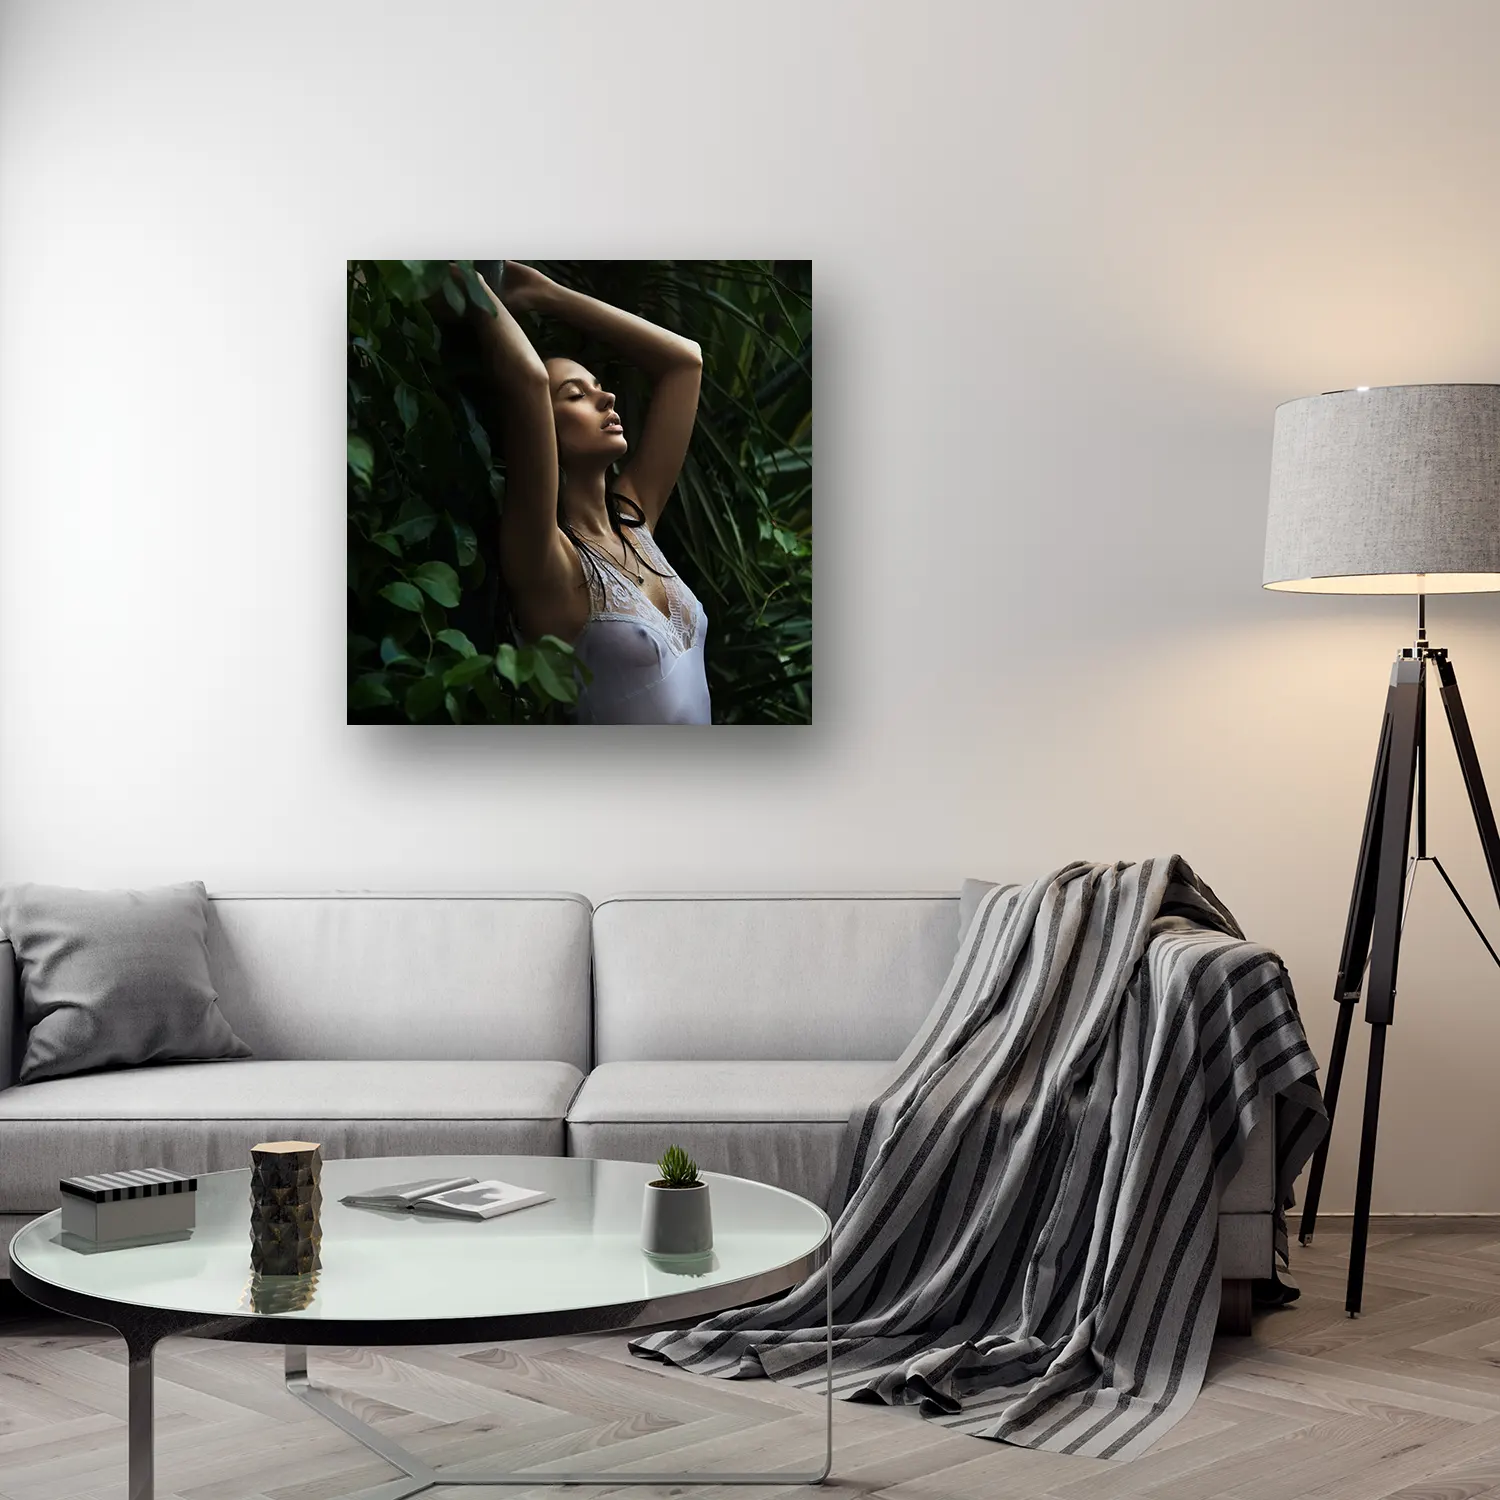 Size Variation 100x100 - Sensual Forest Girl - Fotokunst Wanddecoratie Vierkant